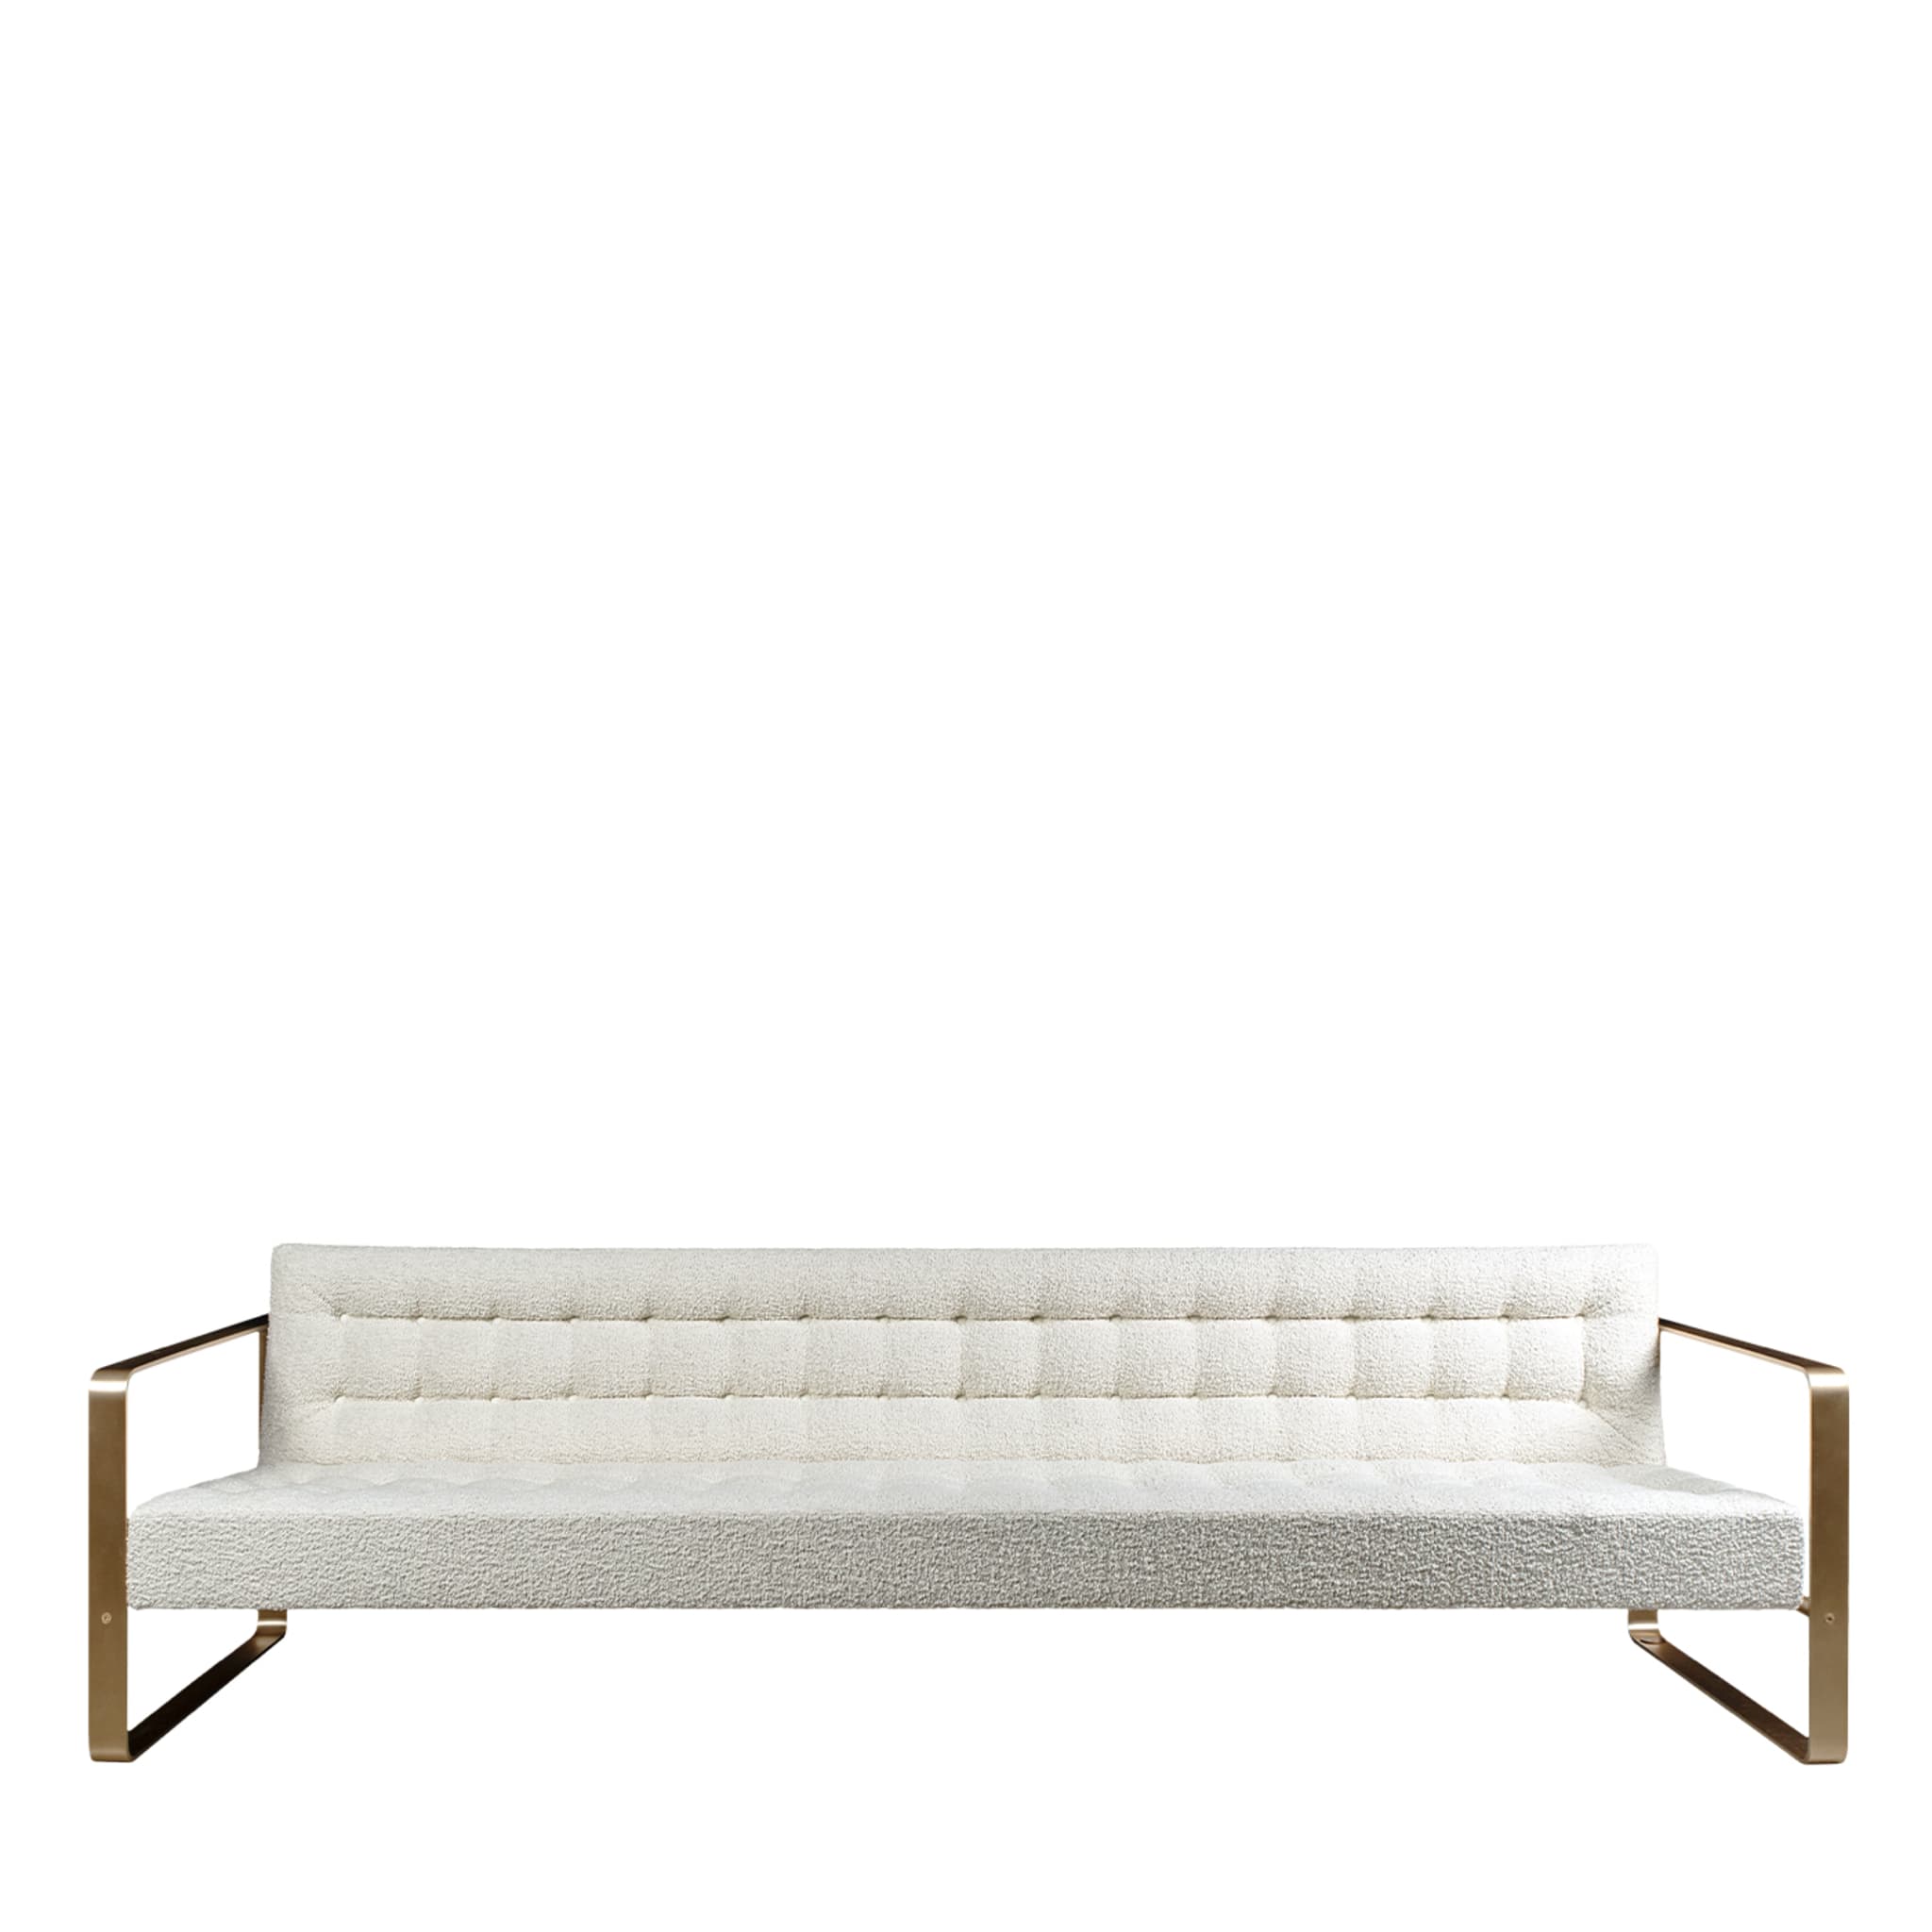 T33 Langes Sofa von Franco Albini - Alternative Ansicht 1